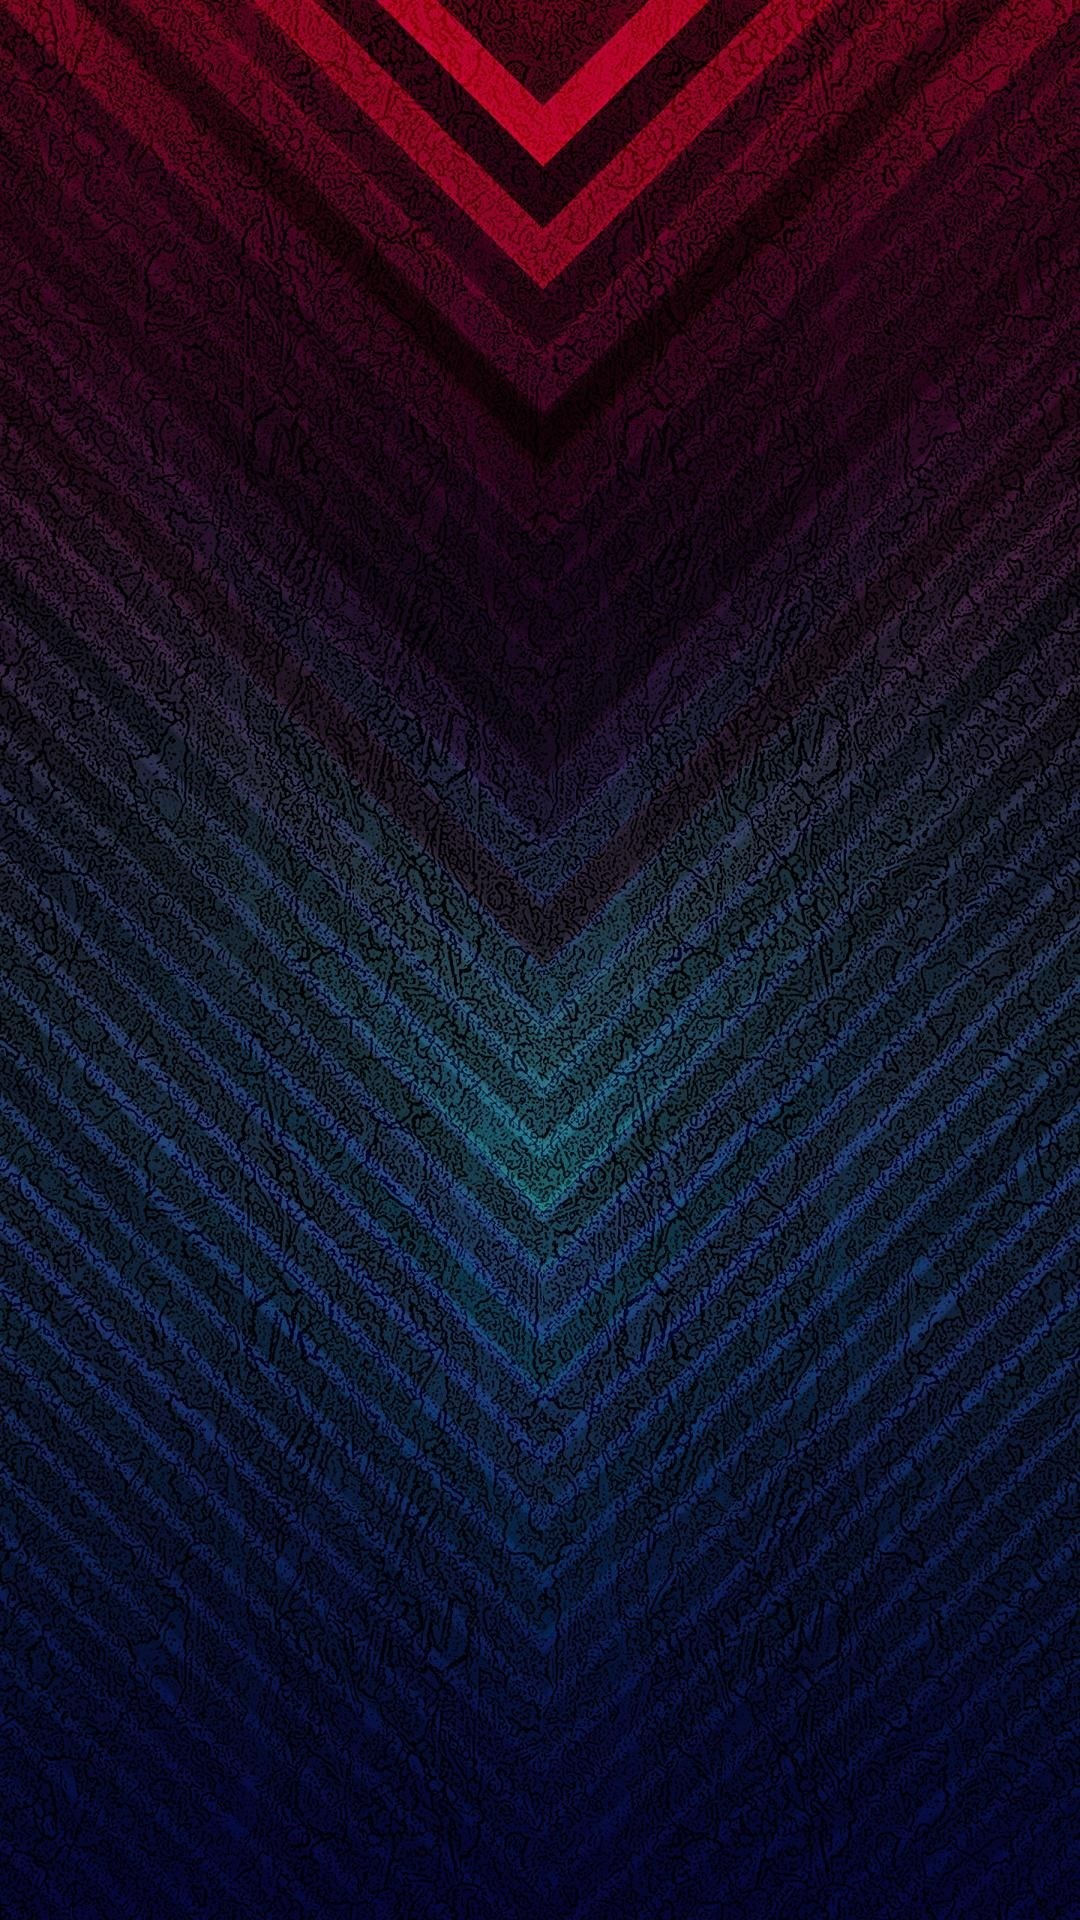 Matrix Iphone Wallpapers